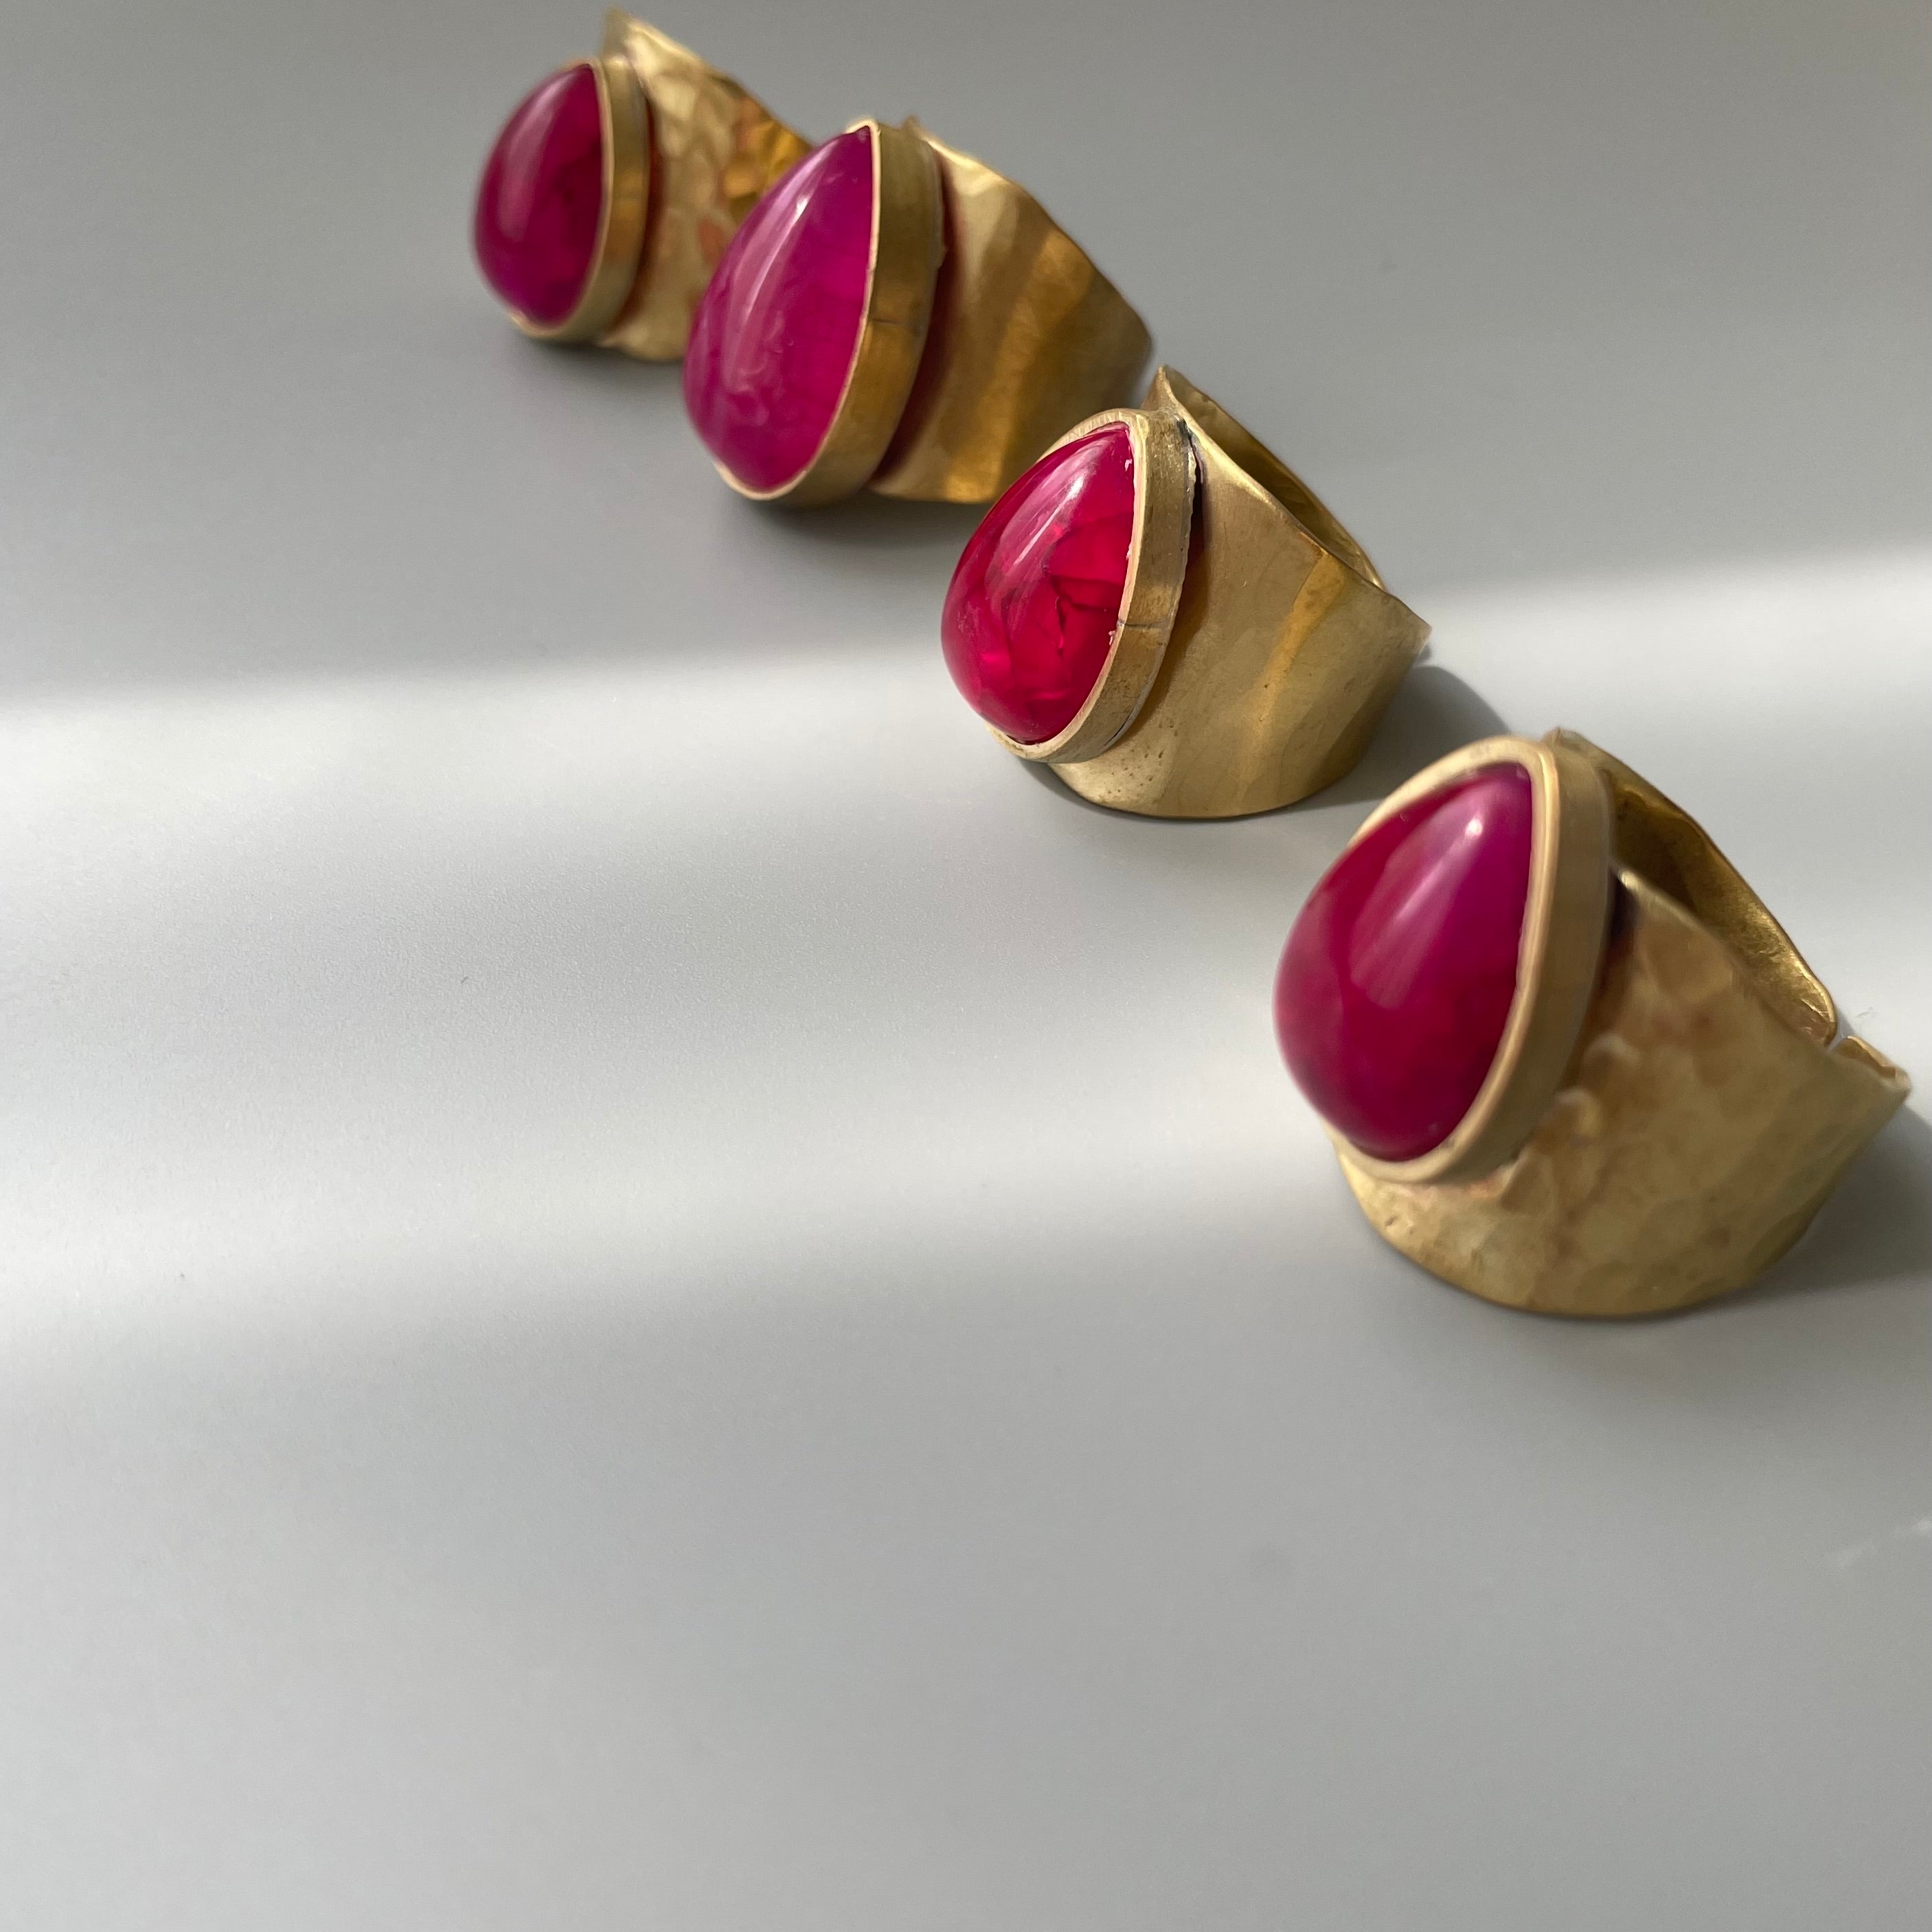 Brass Handmade Ring with Teardrop Shaped Raspberry Colored Gemstone